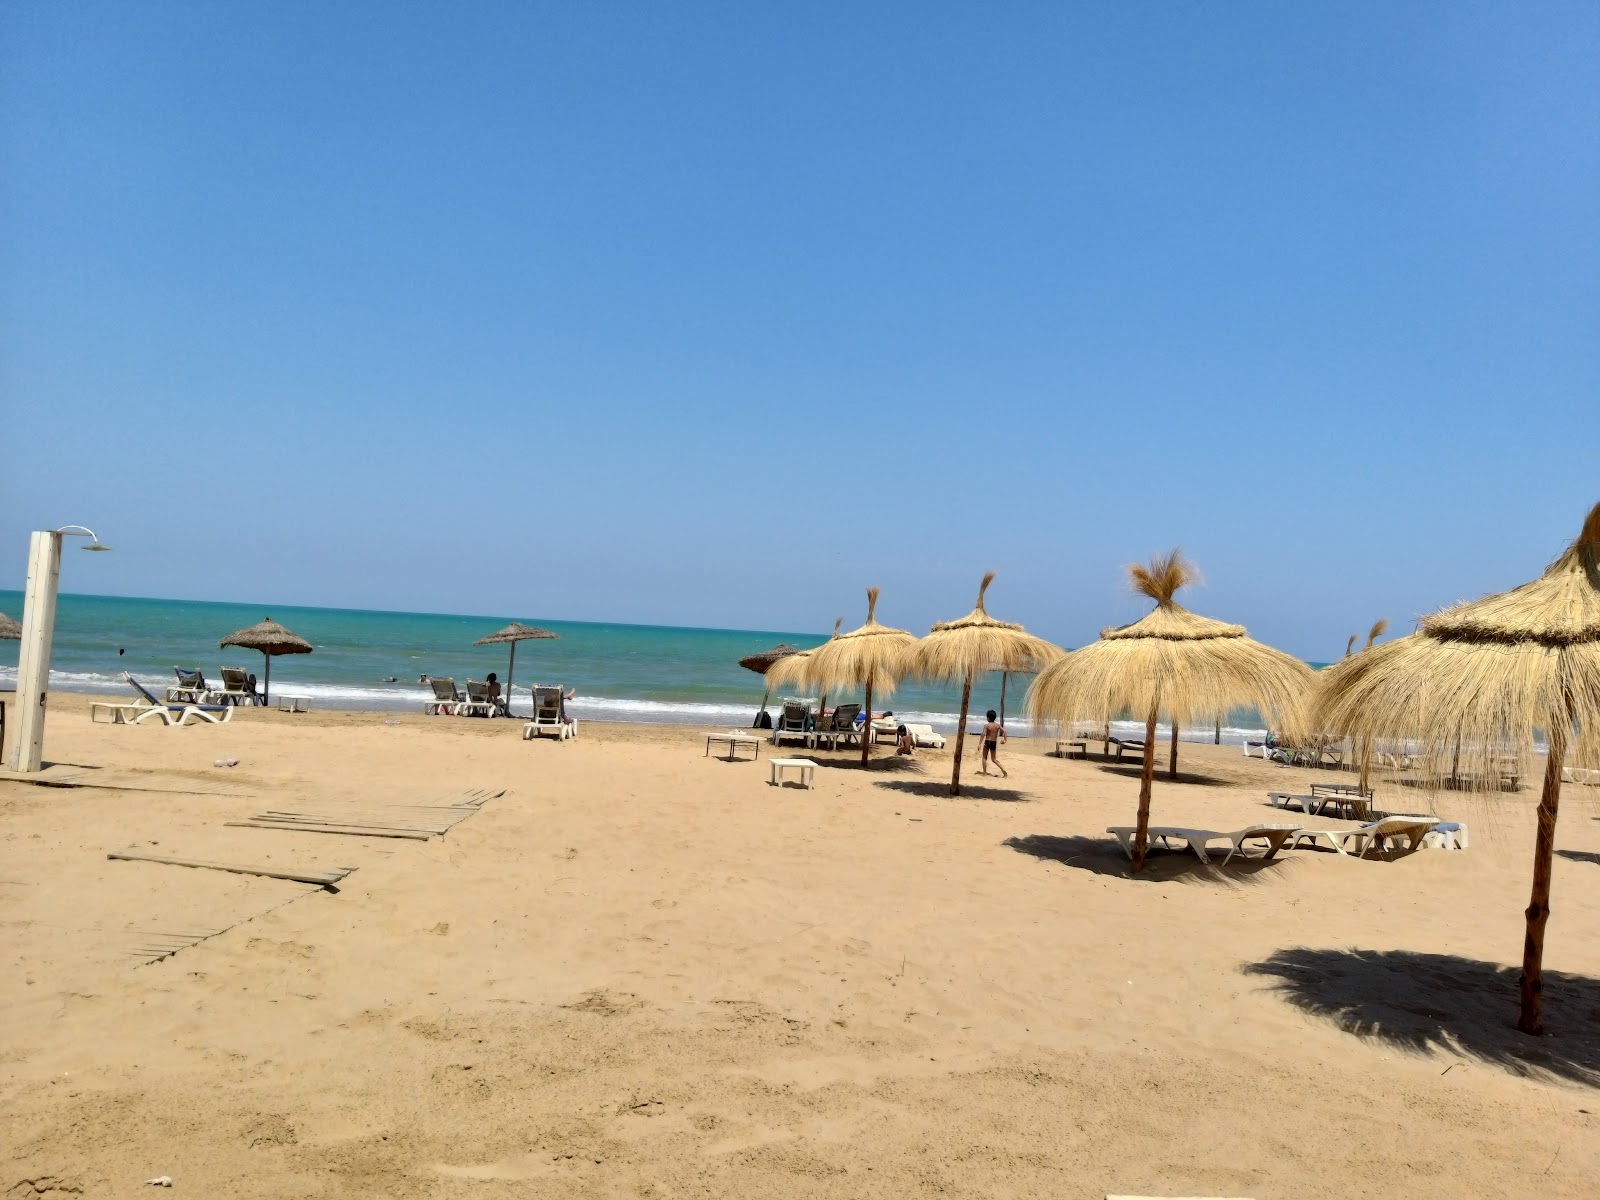 Raoued plage'in fotoğrafı turkuaz su yüzey ile